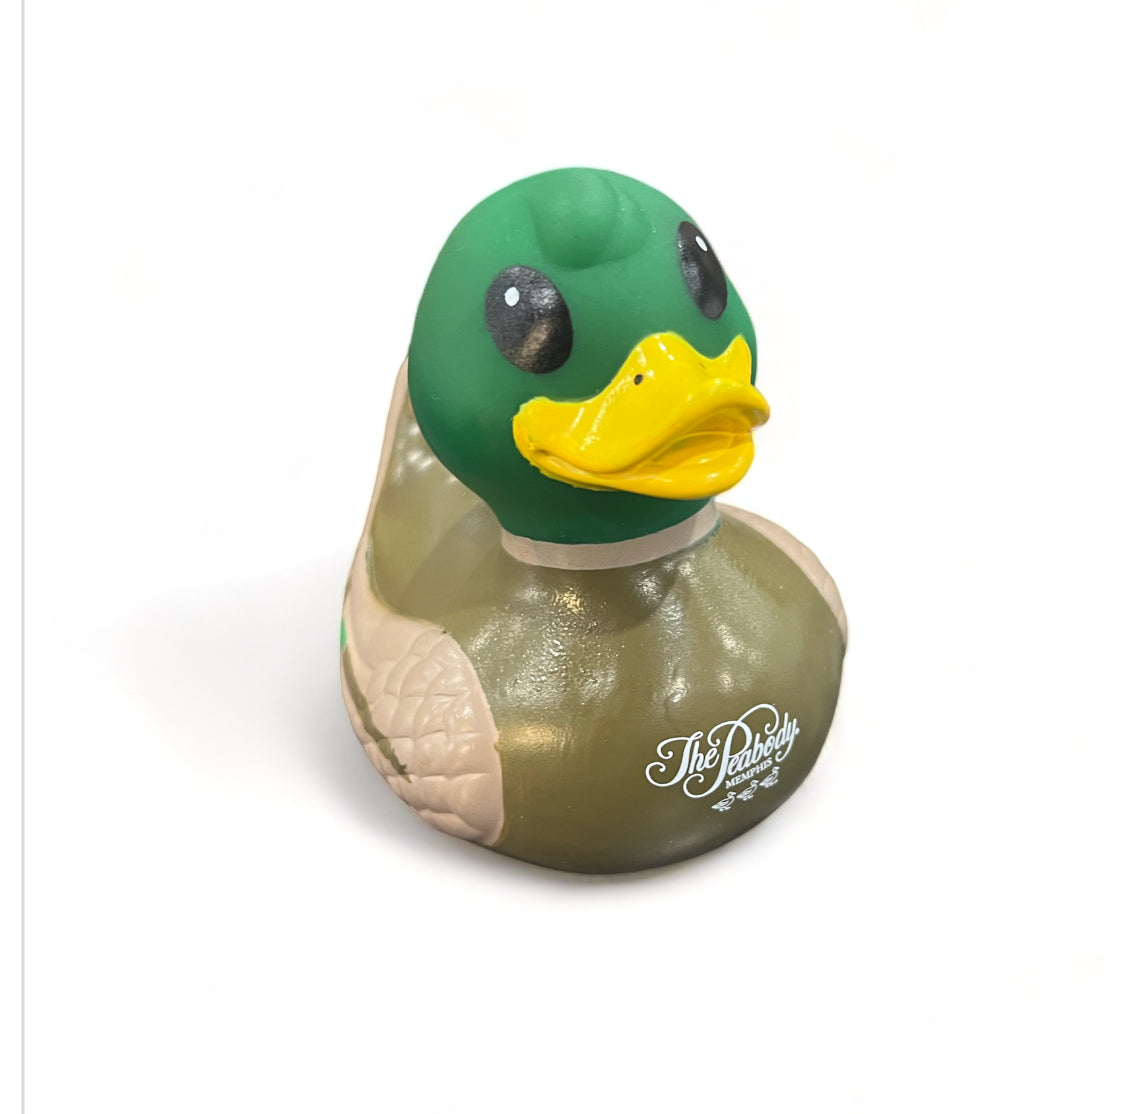 Peabody Mallard Rubber Duck